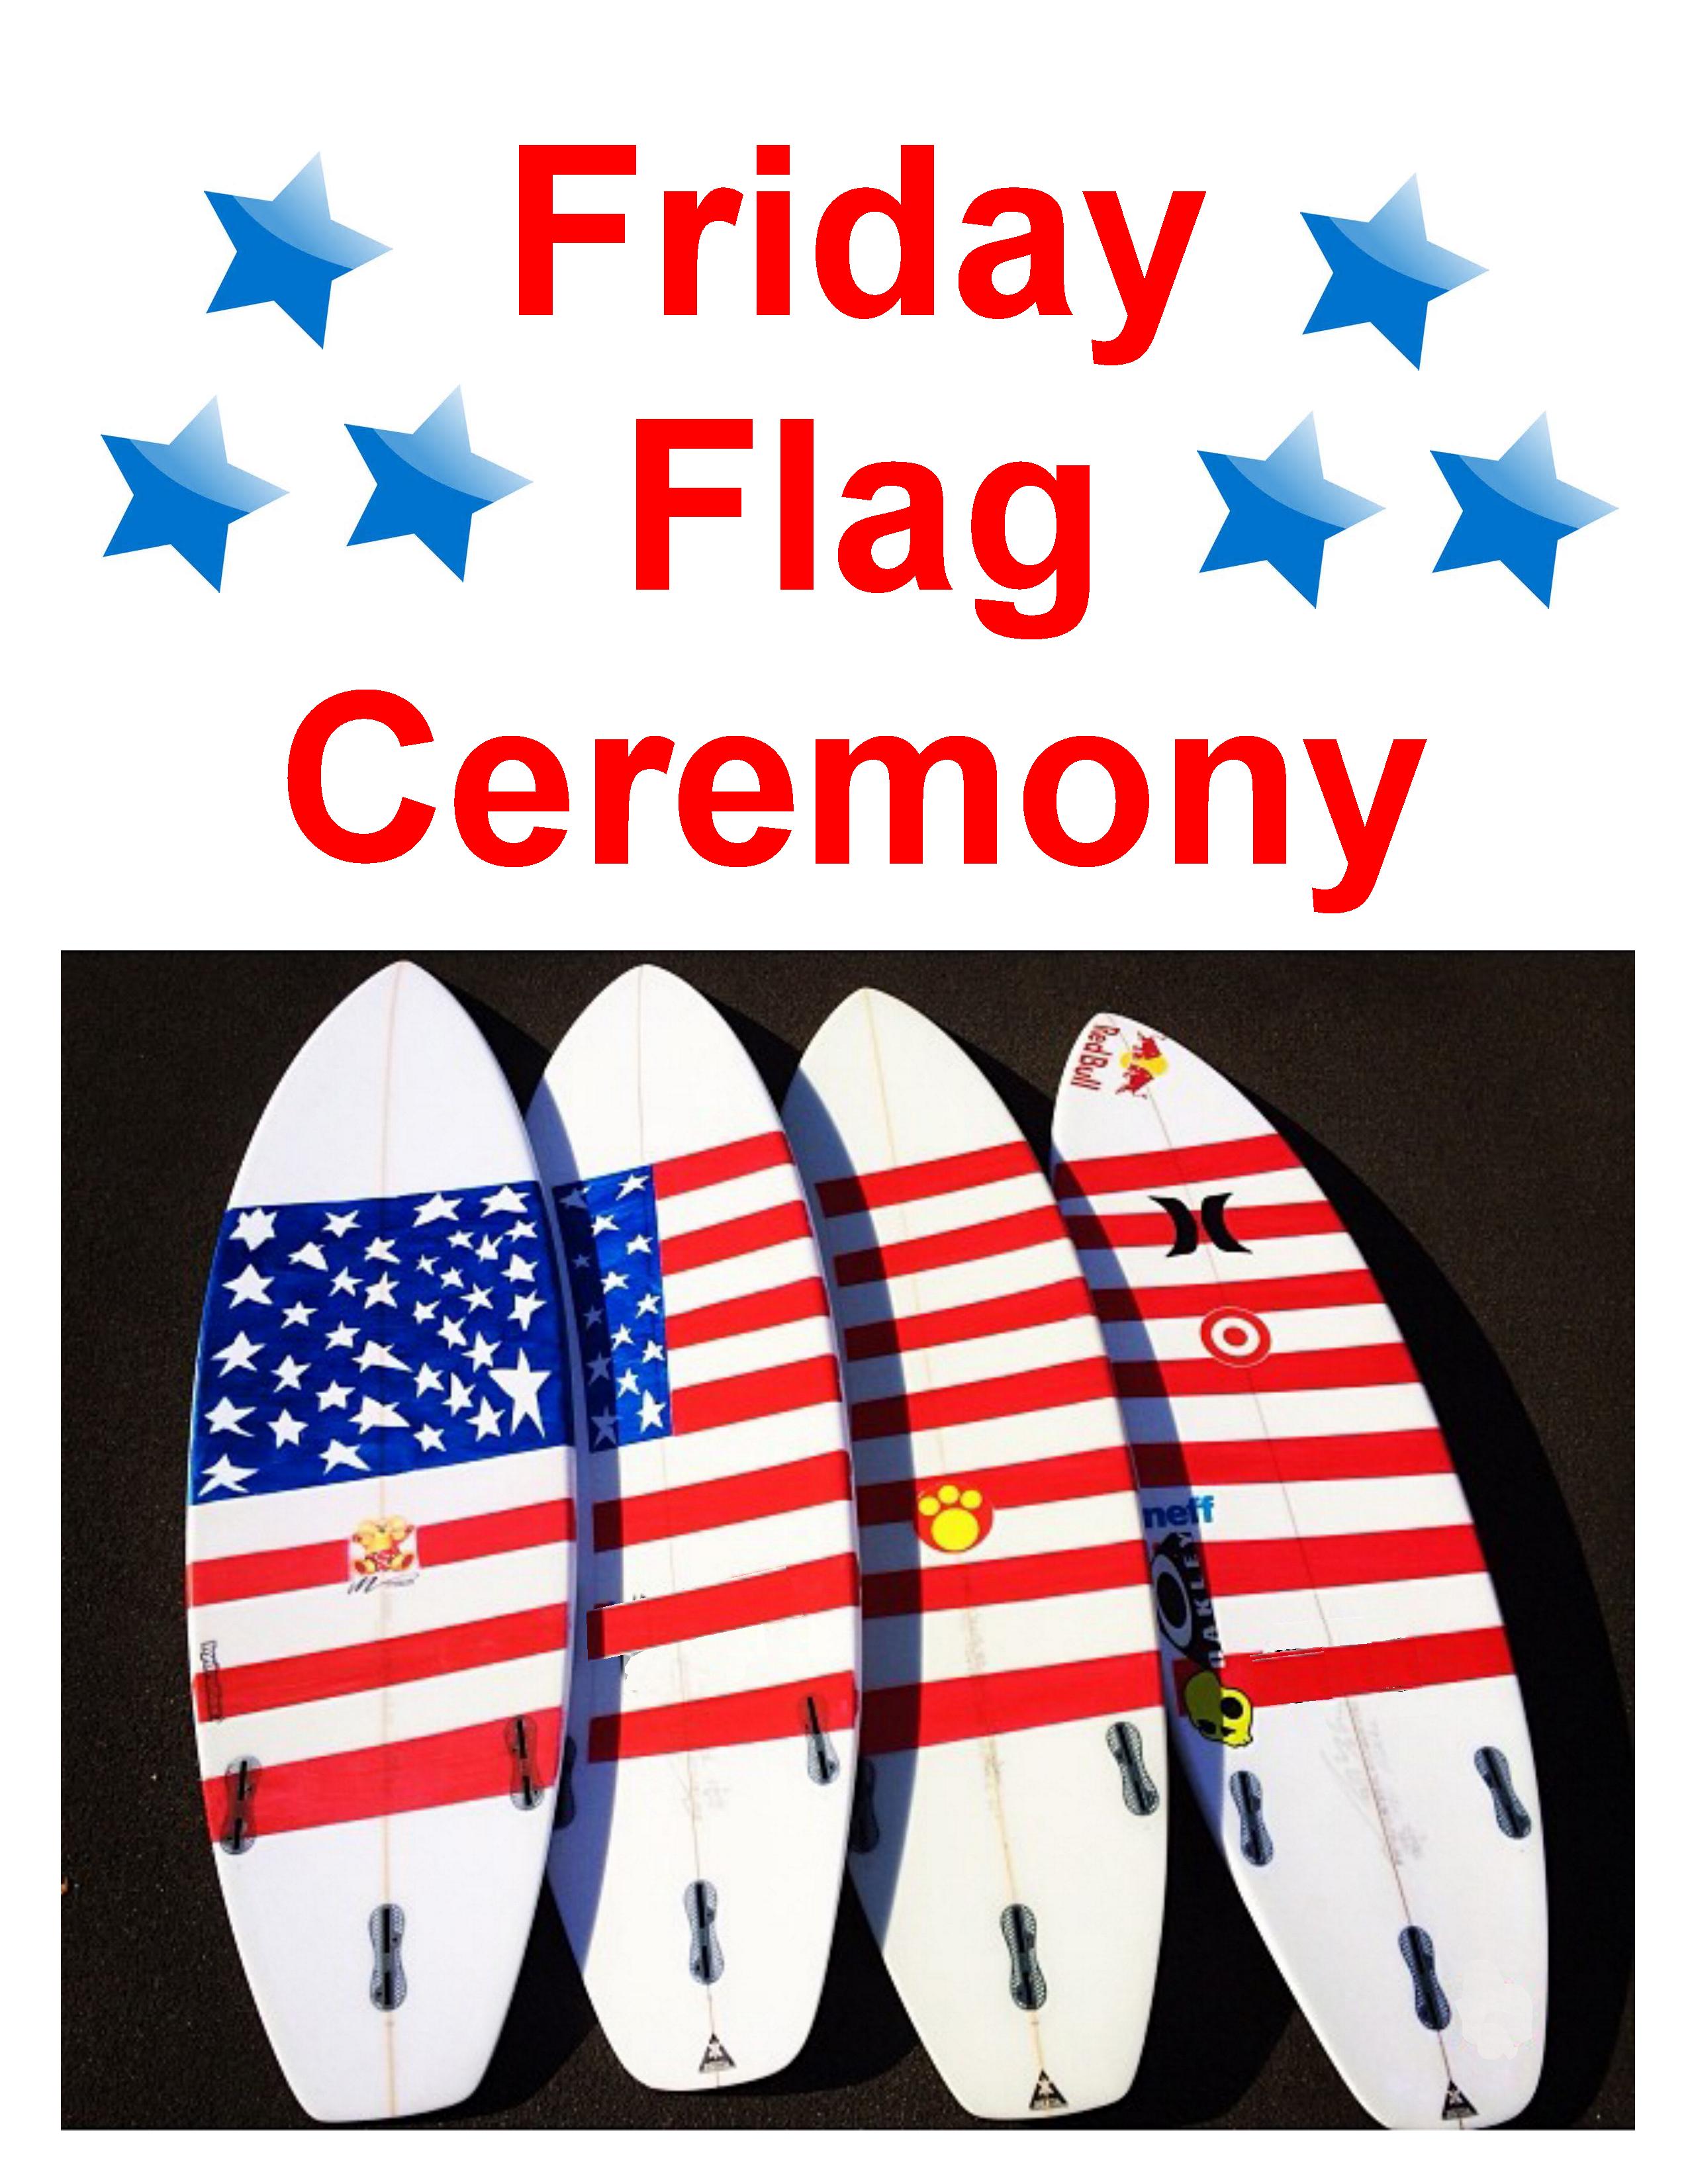 Friday flag ceremony poster